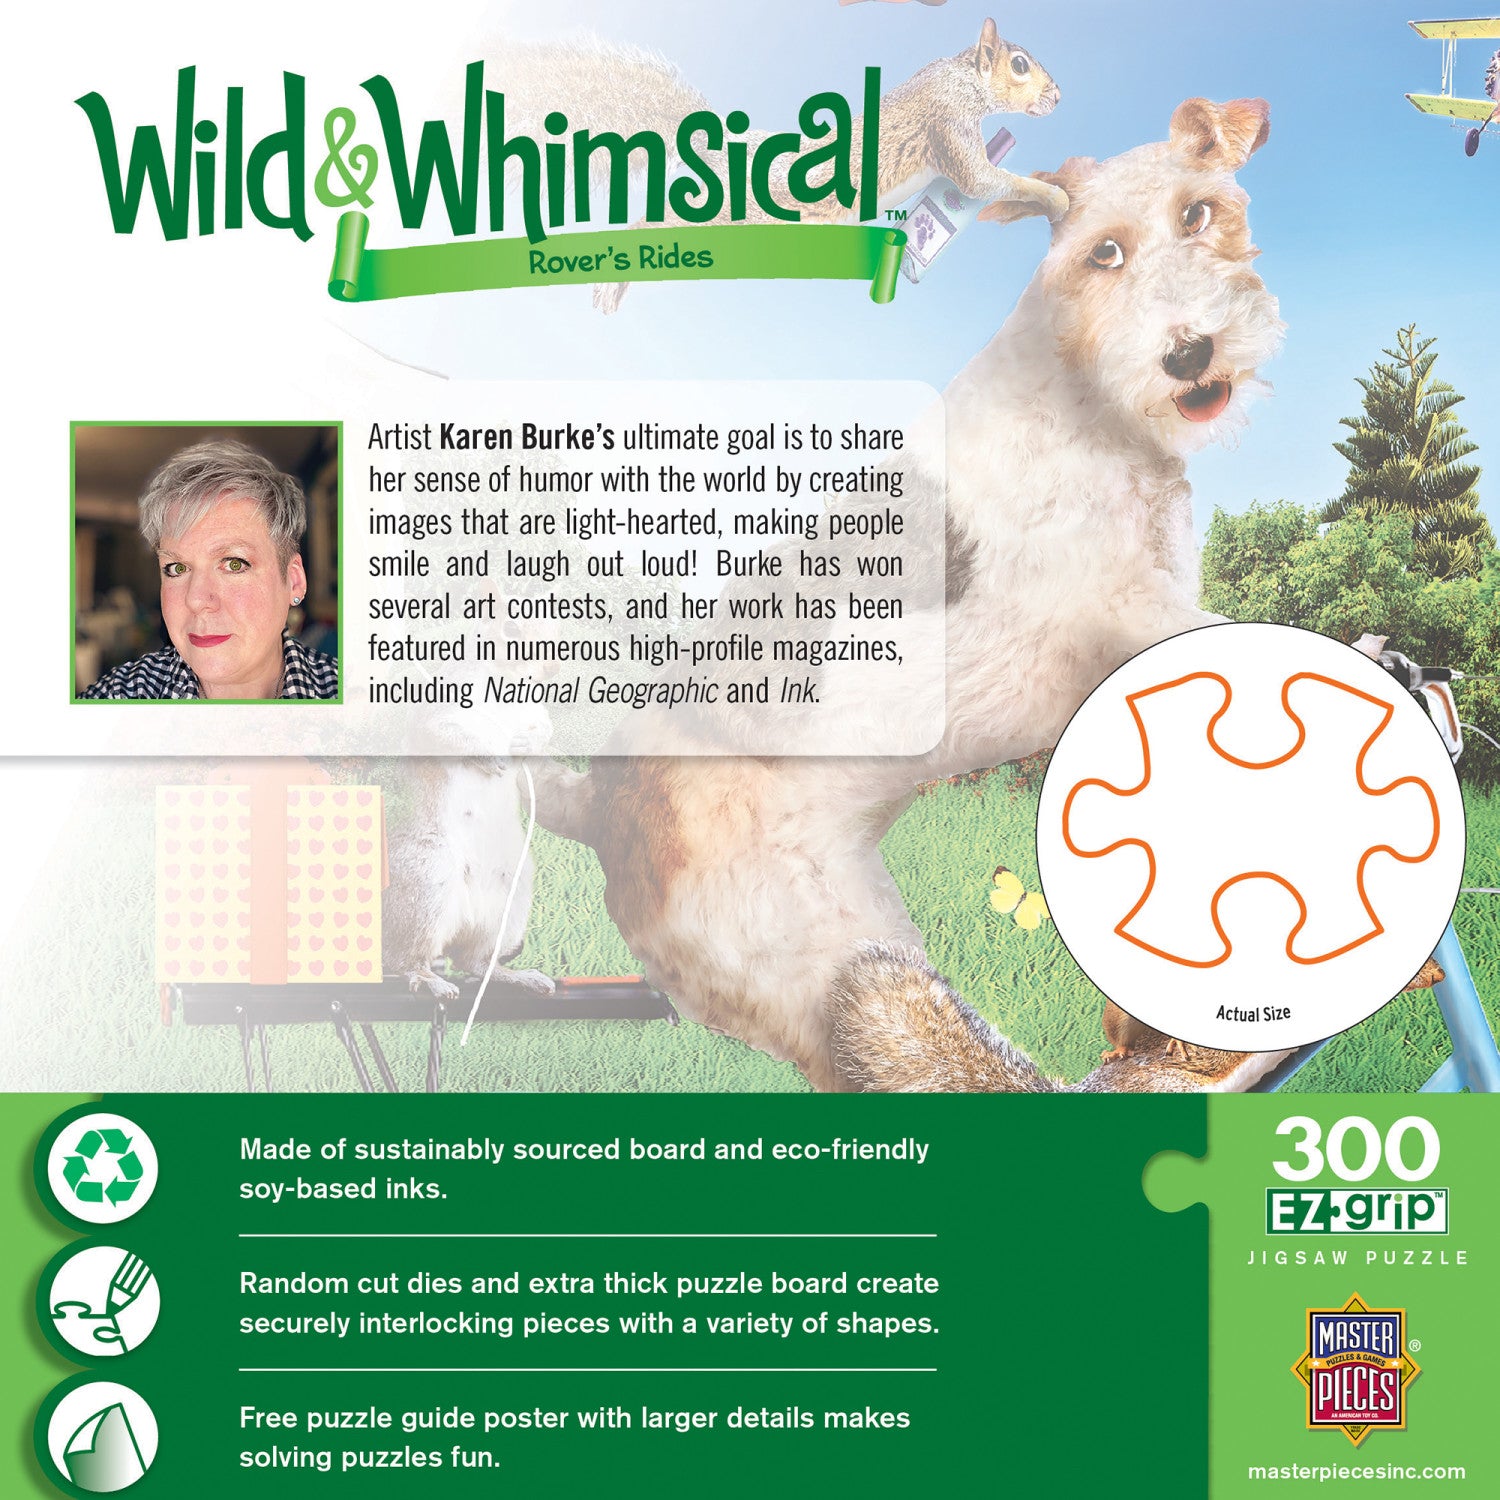 Wild & Whimsical - Rover Rides 300 Piece EZ Grip Puzzle